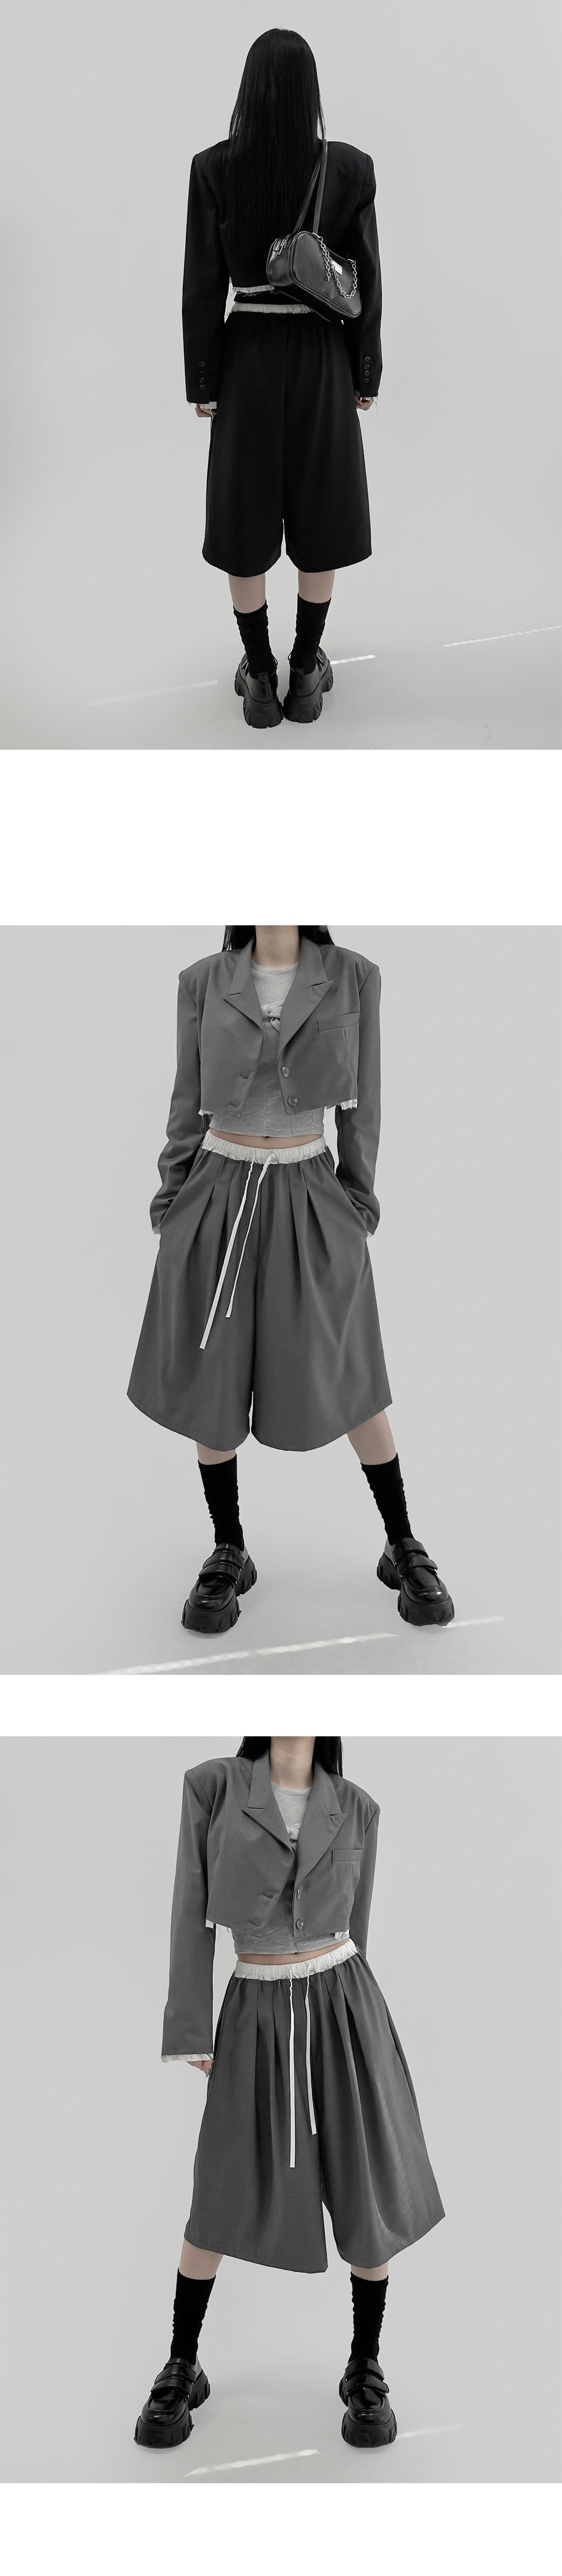 dress grey color image-S1L5